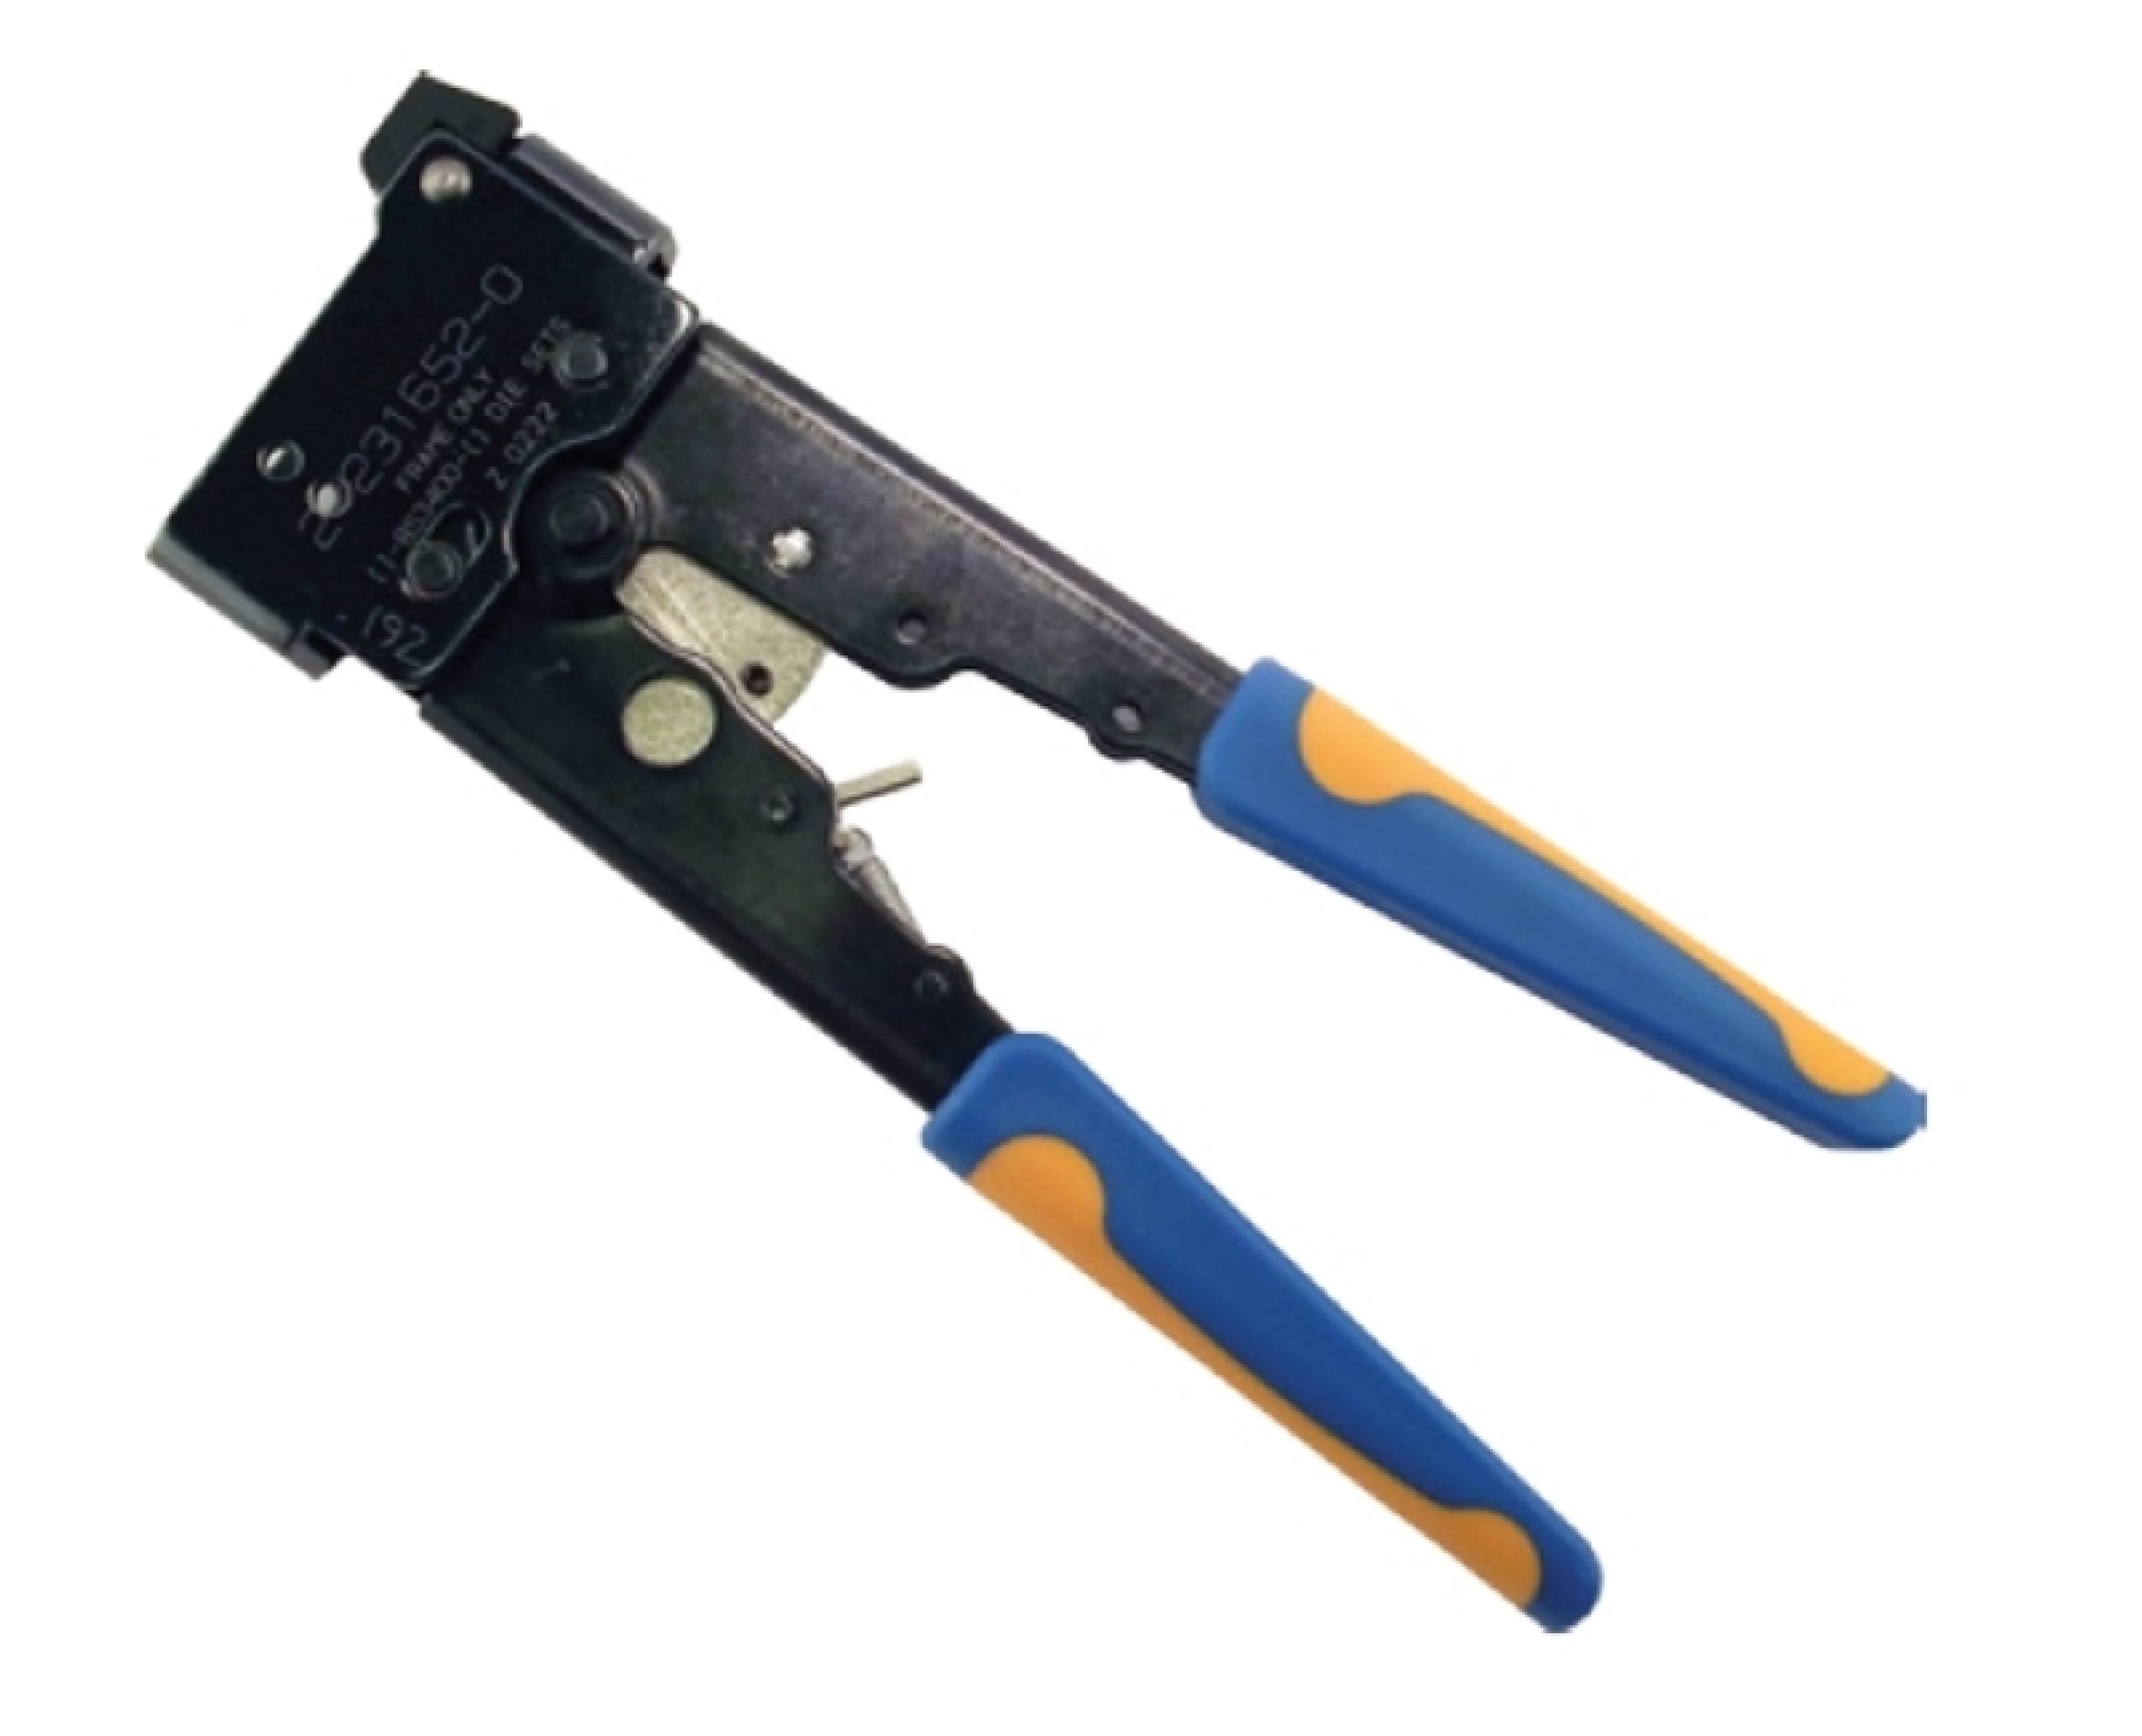 CommScope Plugs & Termination Tools